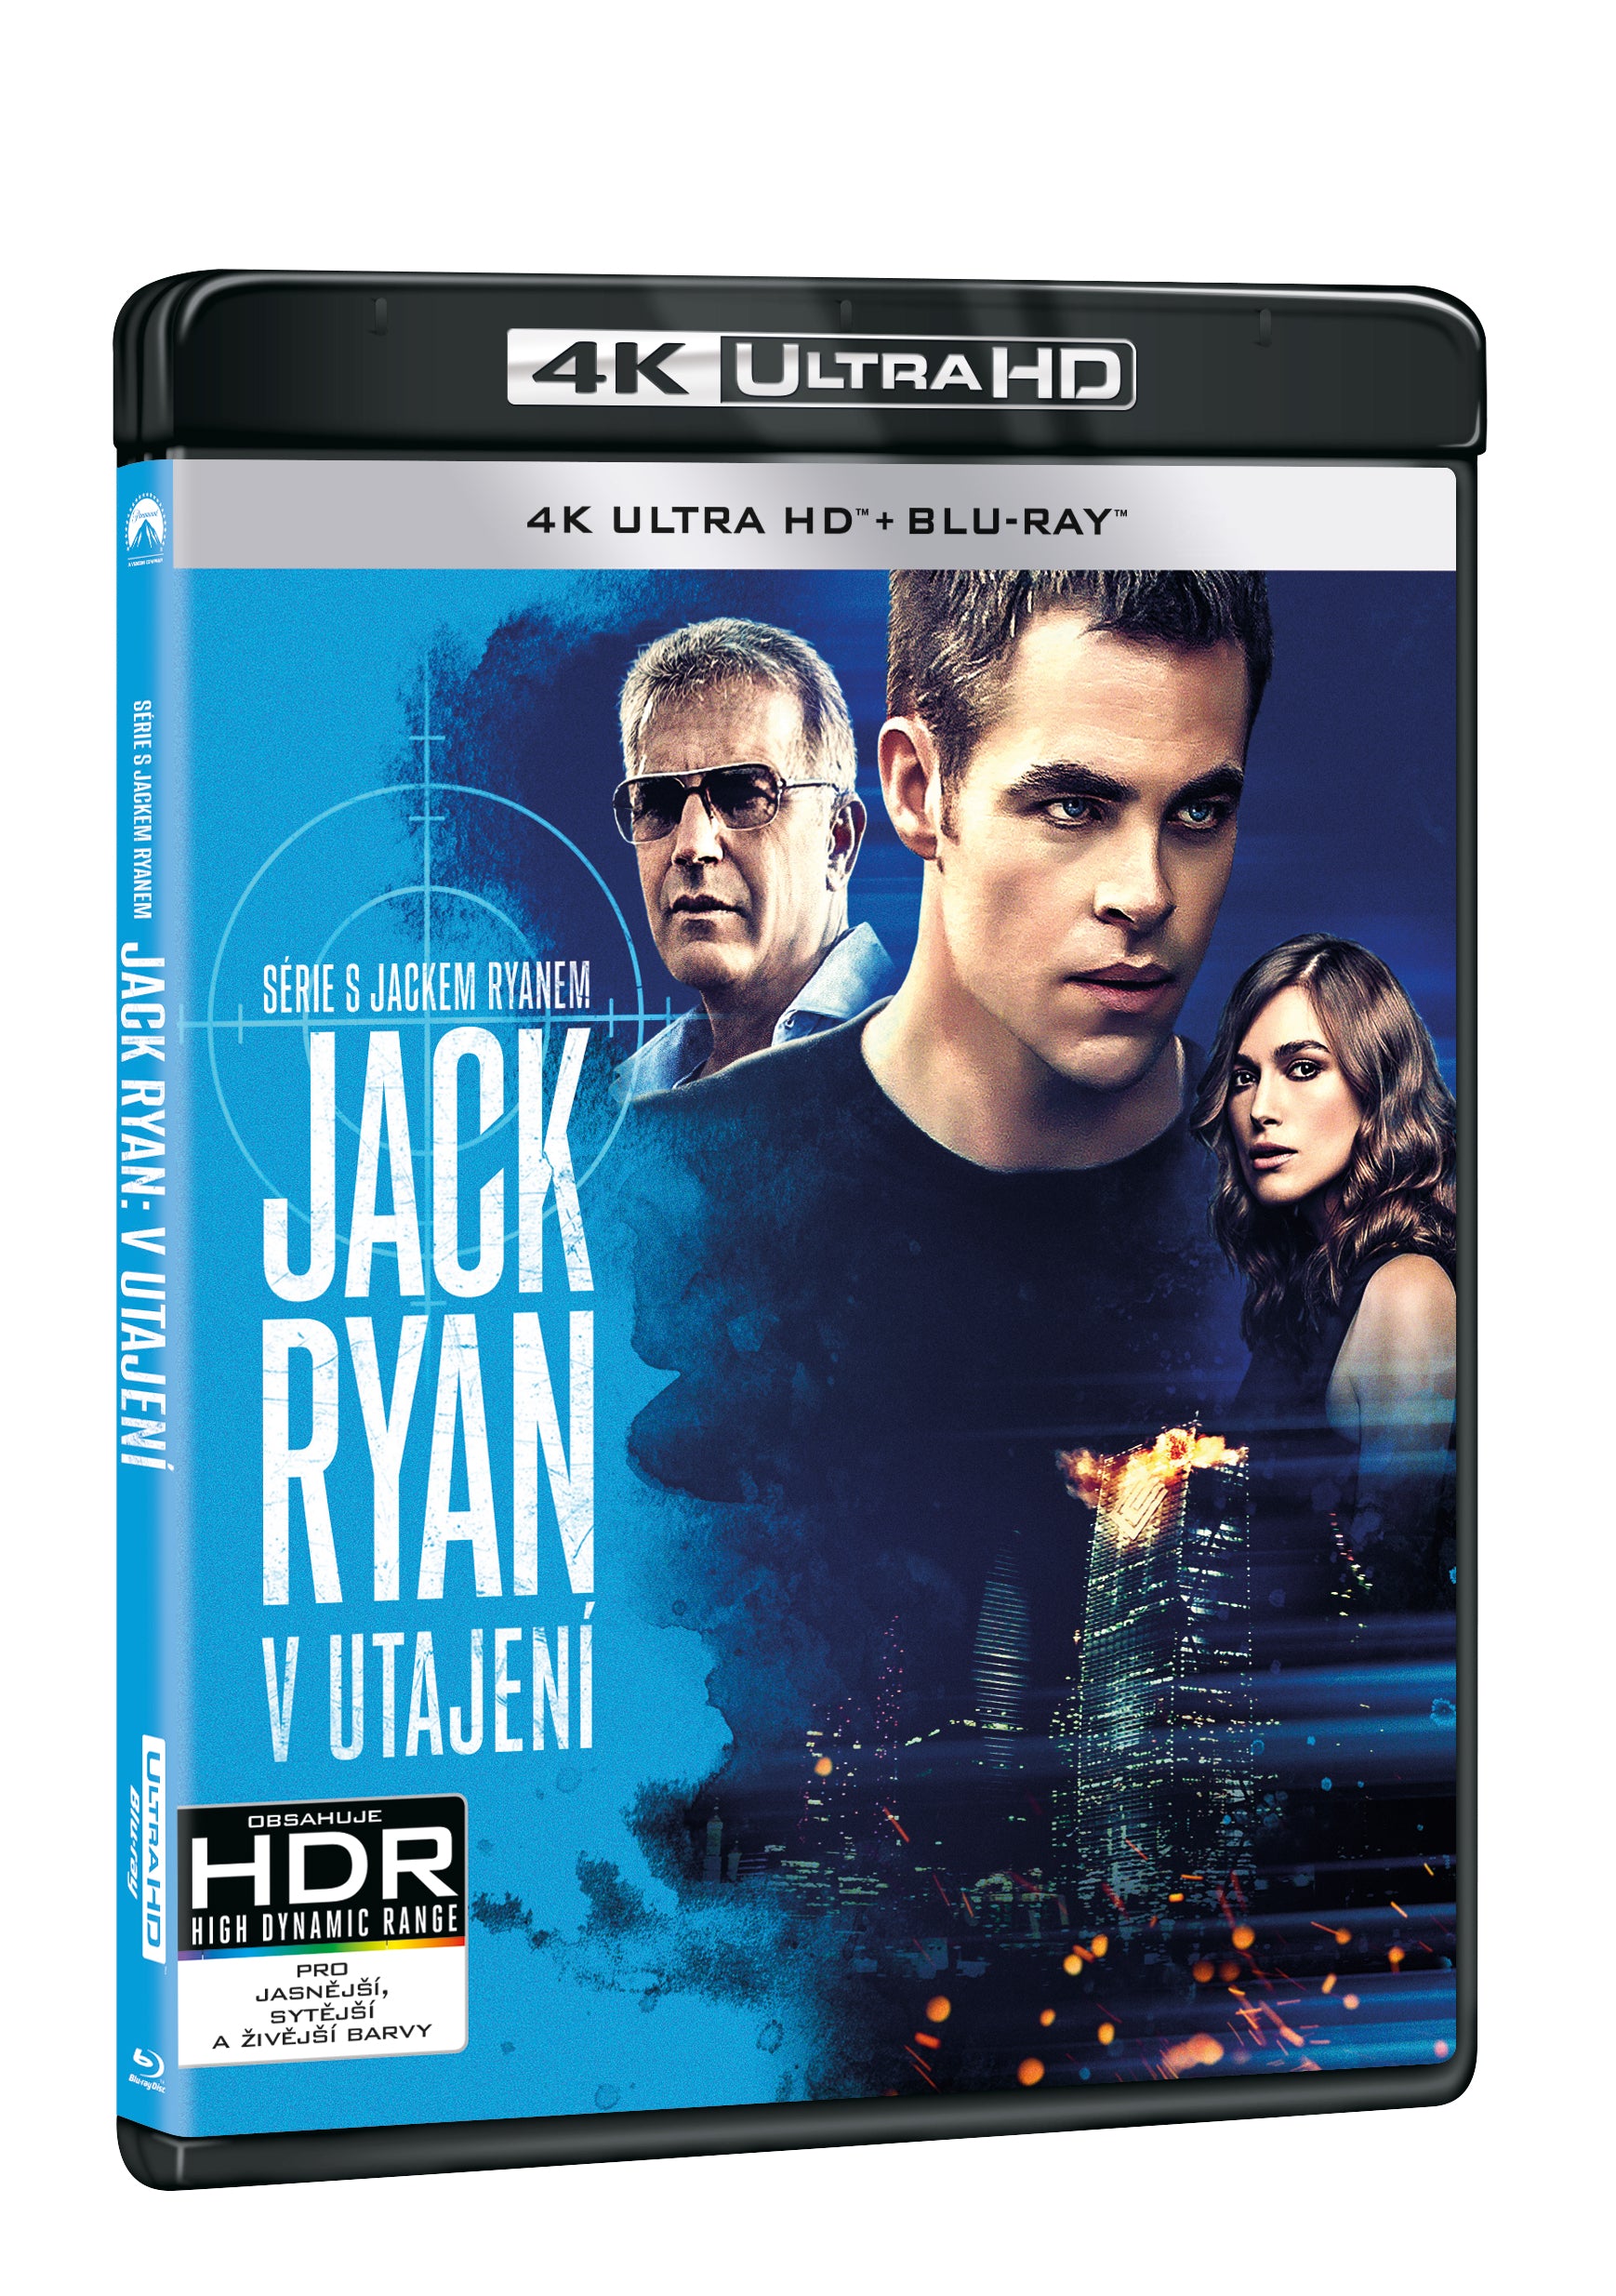 Jack Ryan: V utajeni 2BD (UHD+BD) / Jack Ryan: Shadow Recruit - Czech version